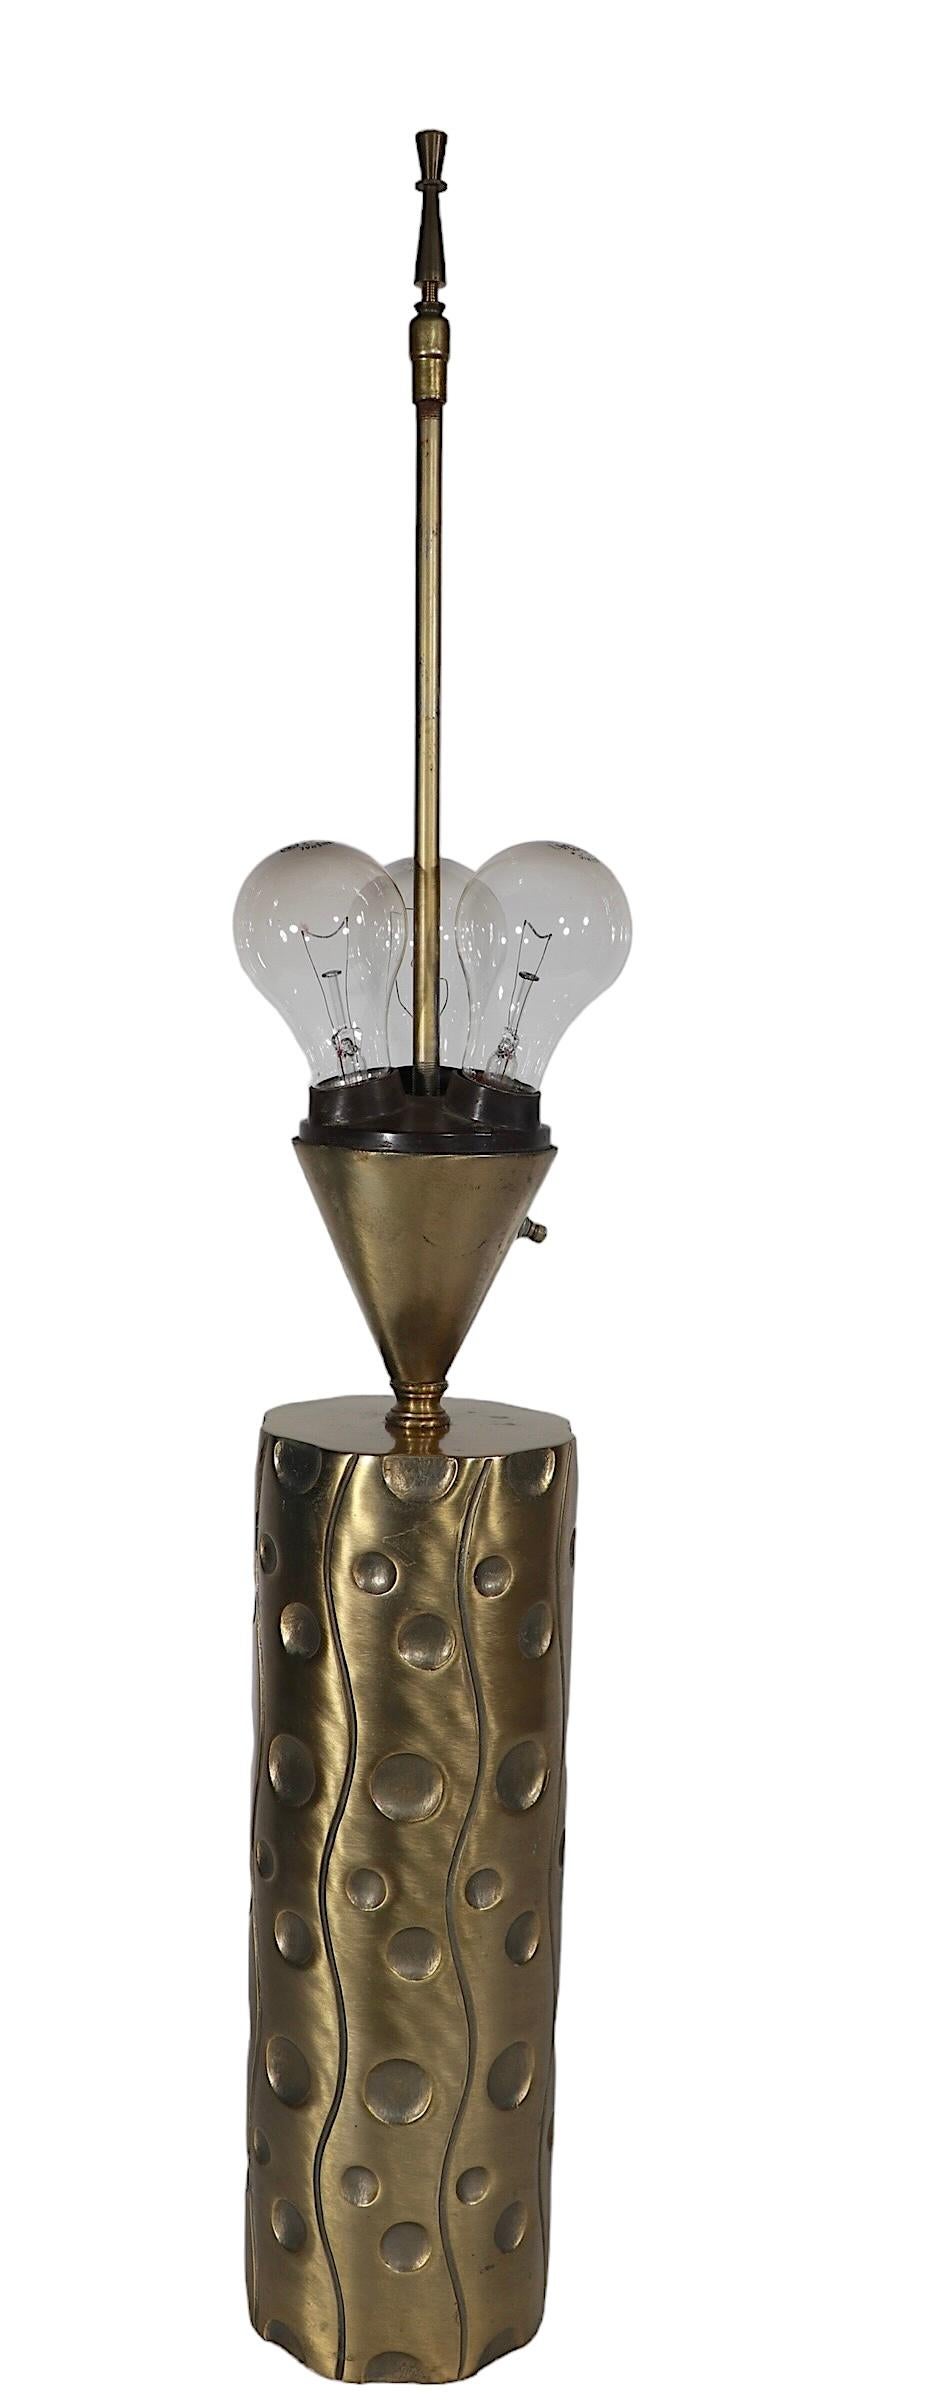  Westwood Table Lamp att. Tony Paul c. 1950/1970's  For Sale 8